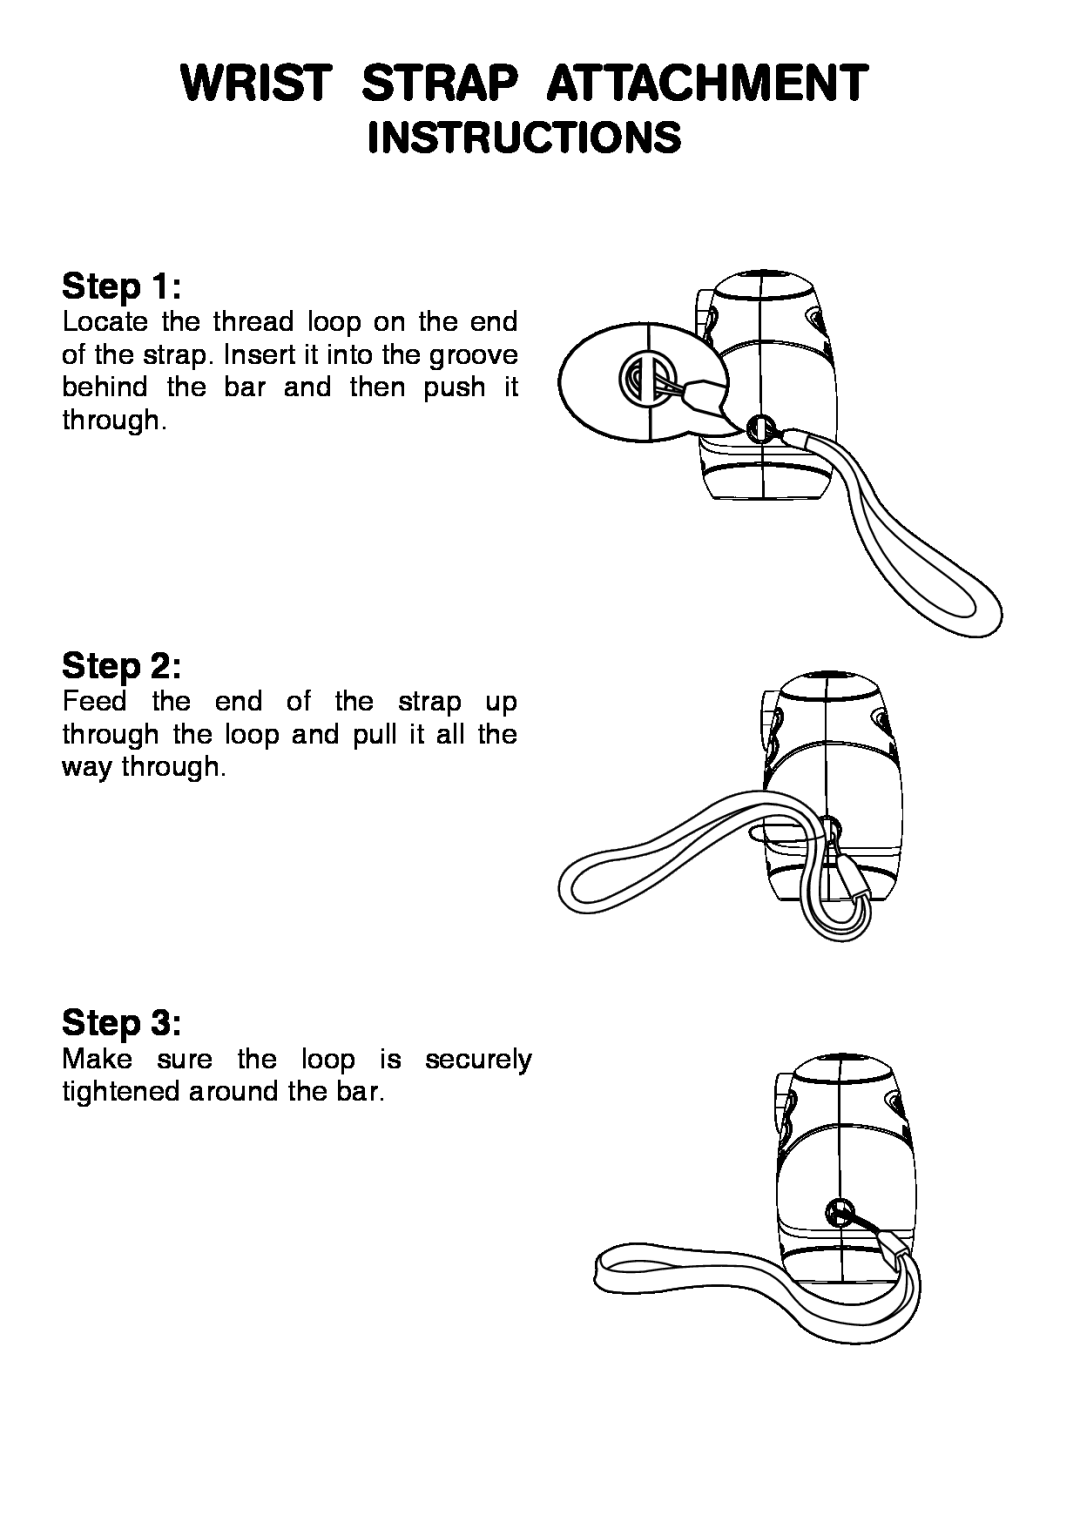 VTech 91-002843-000 user manual Wrist Strap Attachment, Instructions, Step 